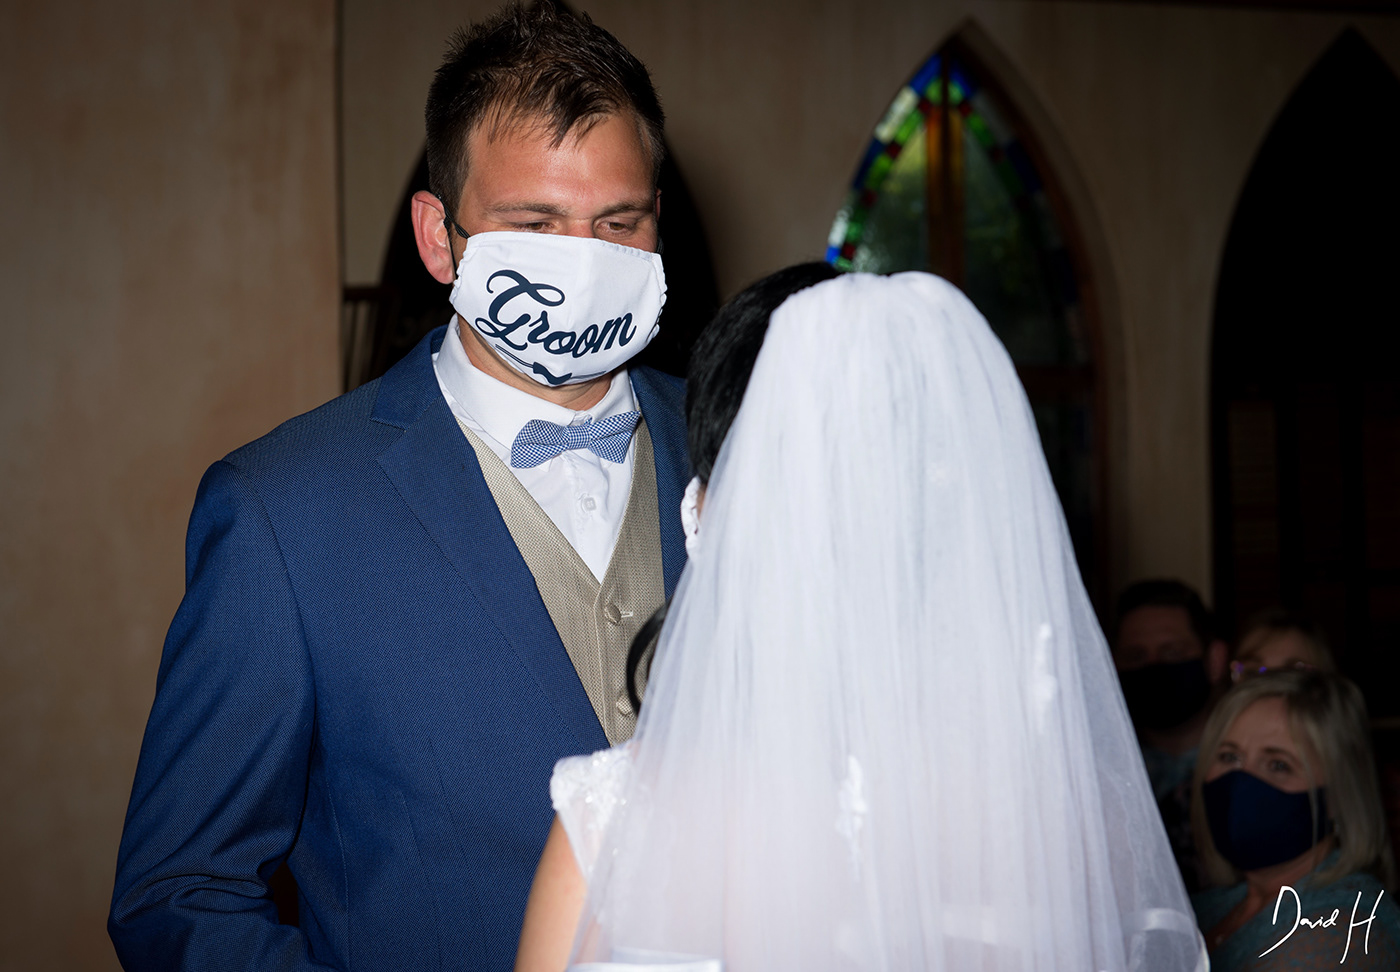 COVIT DHPhotography Isolation Jeffrey's Bay masks mentroskraal south africa troue wedding Wedding Photography